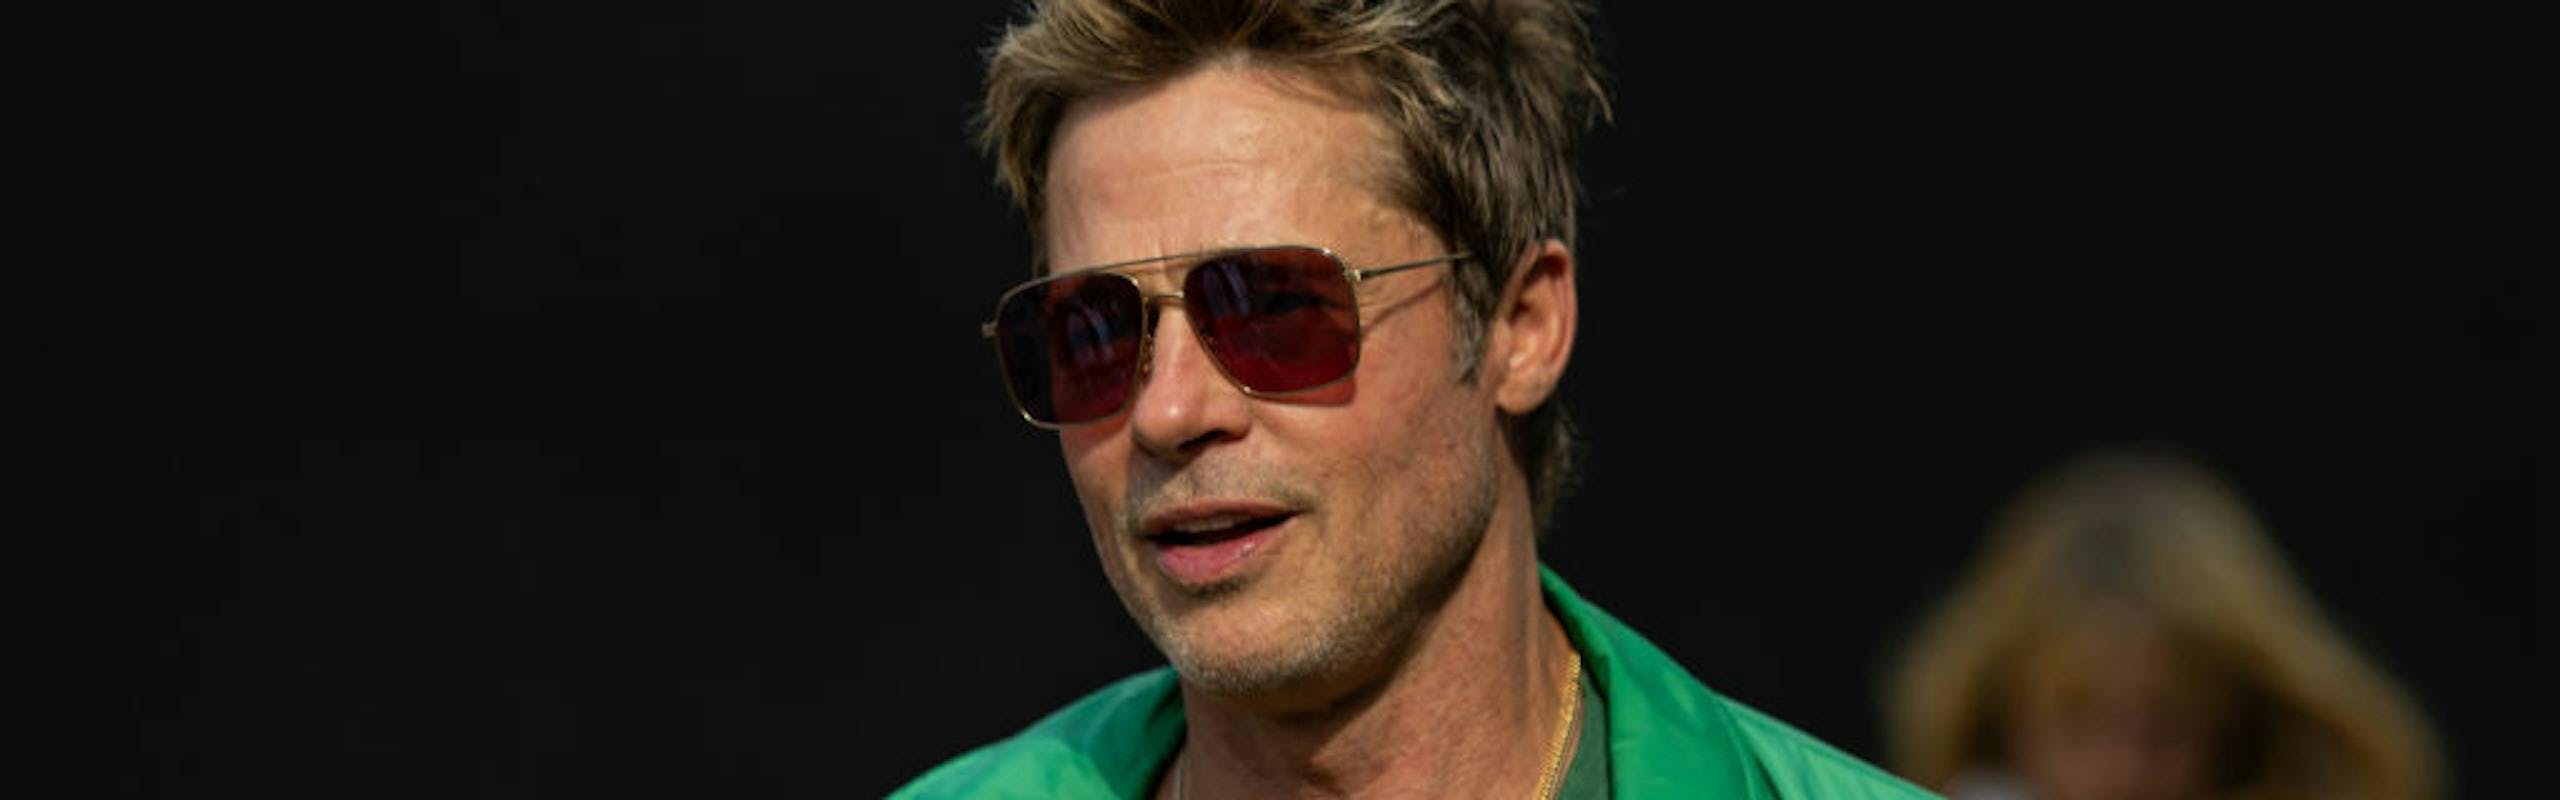 Brad Pitt in a green jacket and shirt celebrities at F1 British Grand Prix 2023